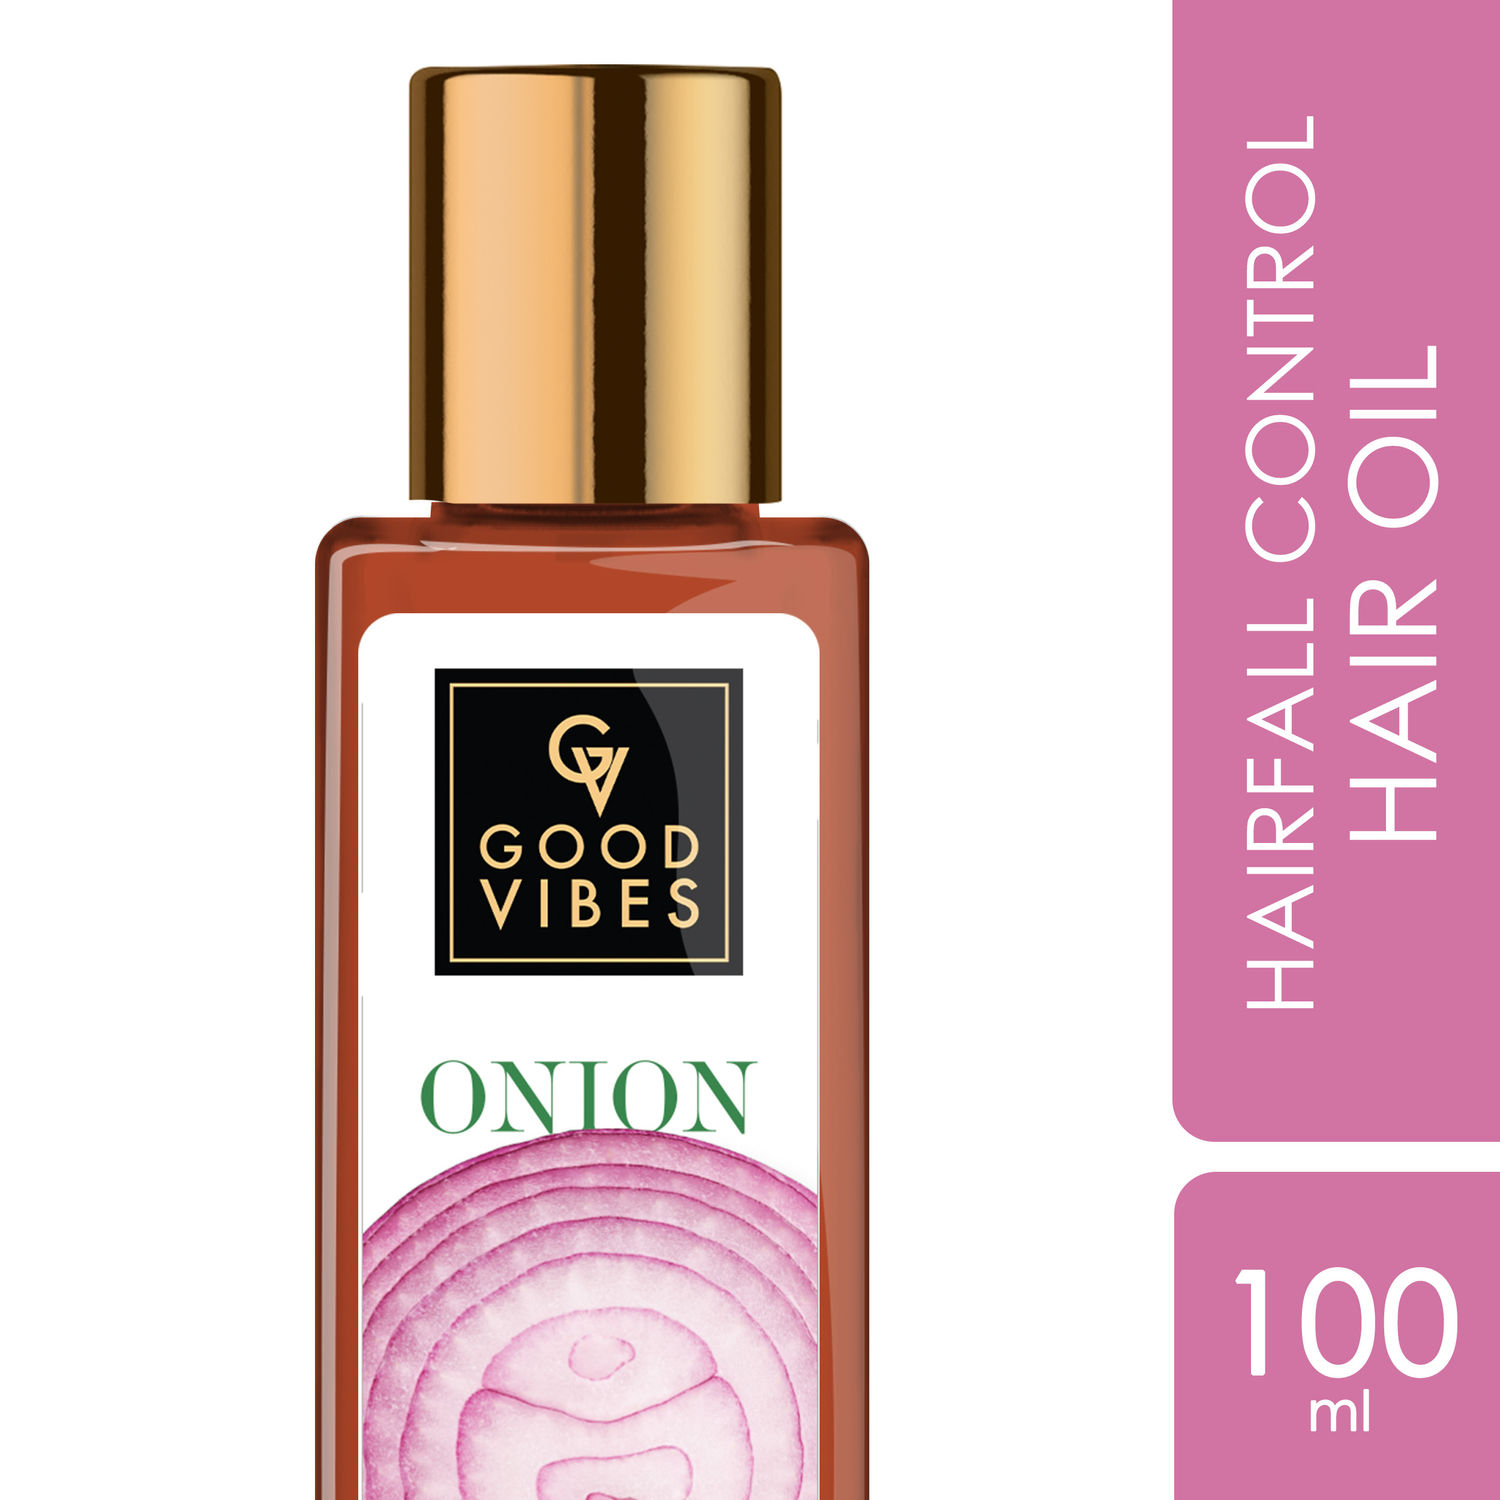 Good Vibes Onion Hairfall Control Hair Oil 100ml